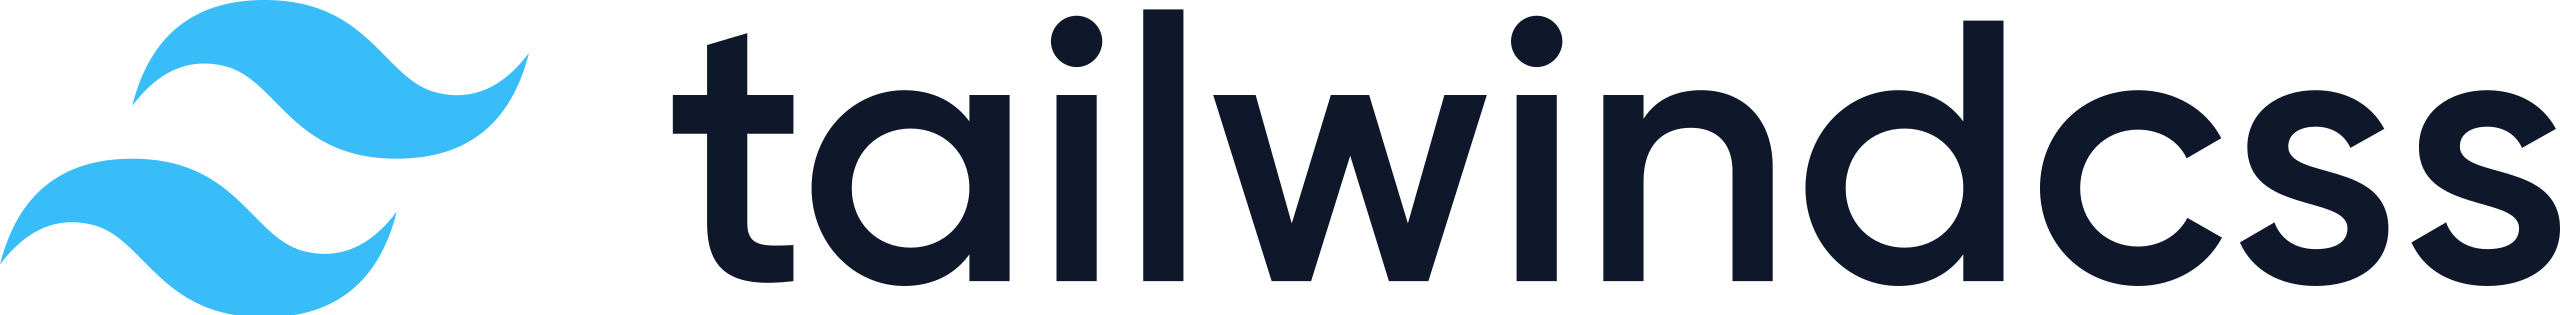 Logo Tailwind css